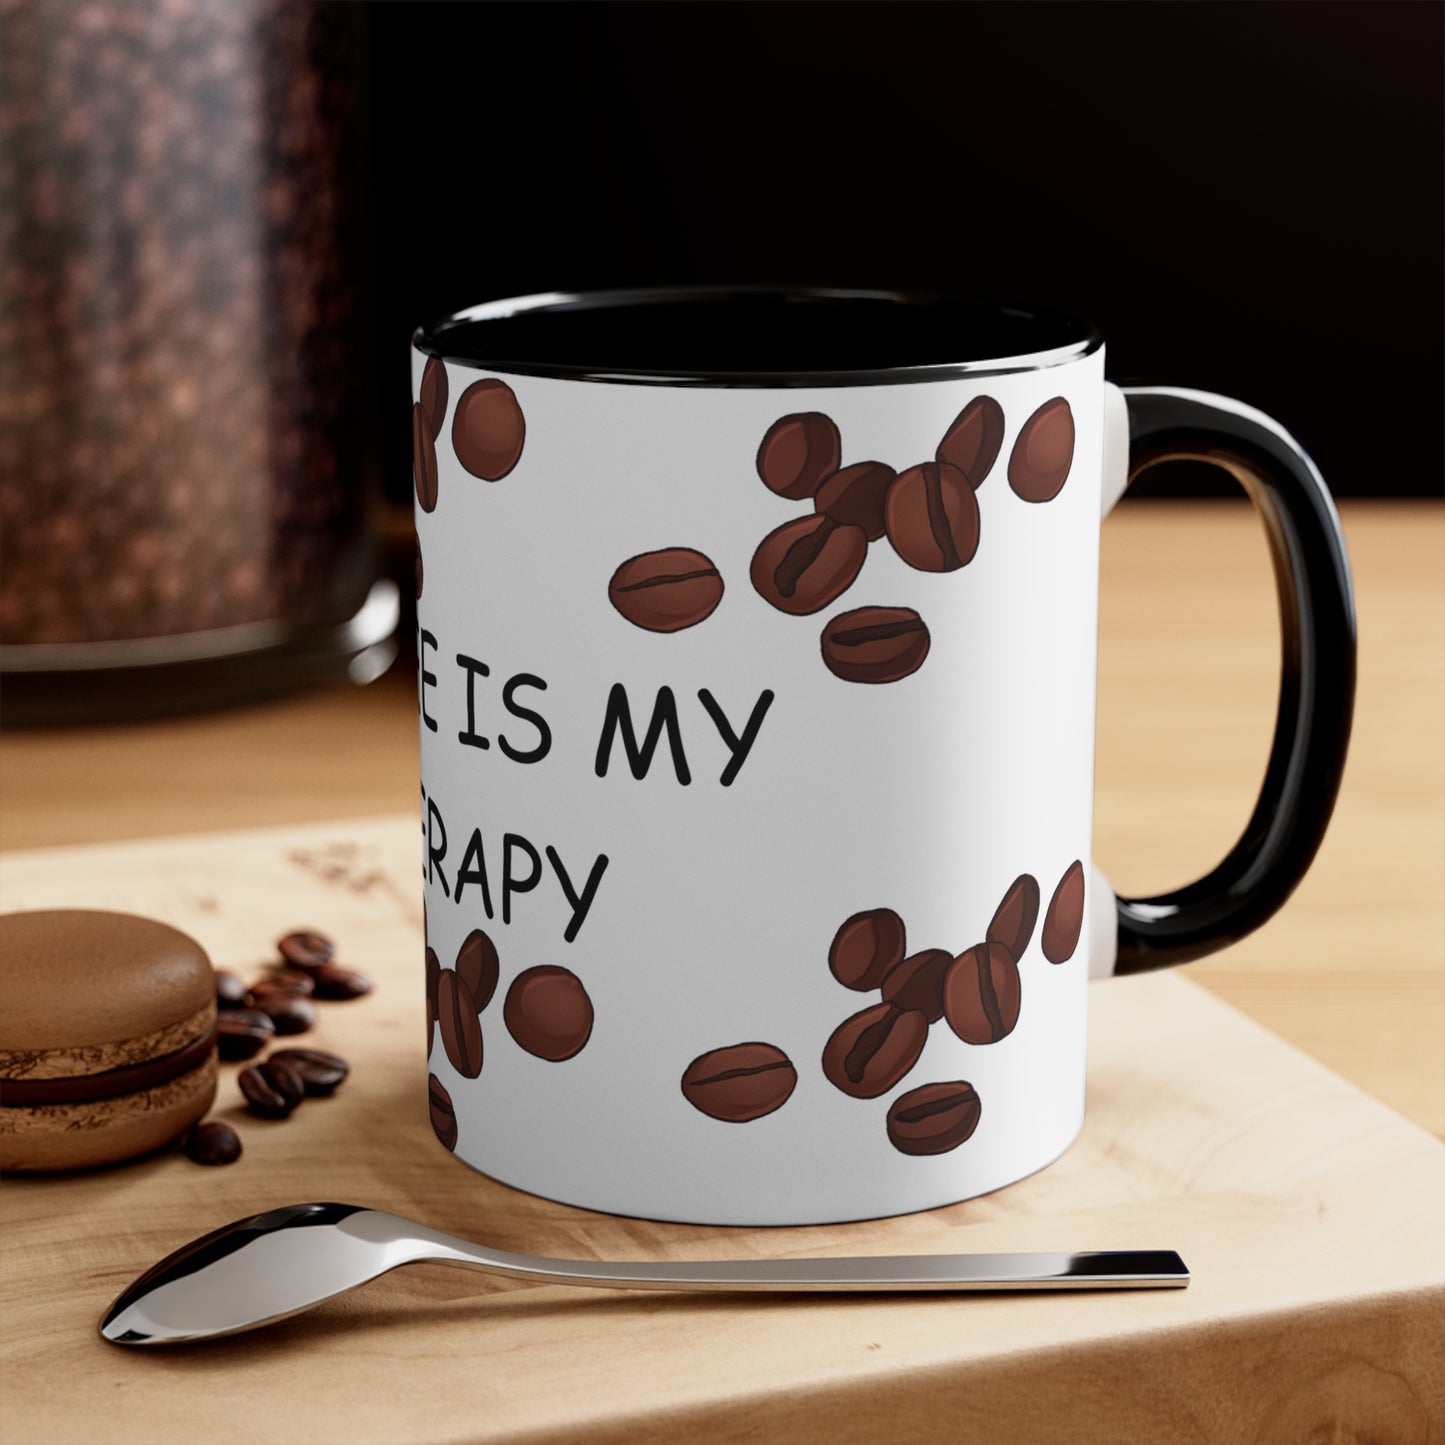 Coffeee Therapy Mug